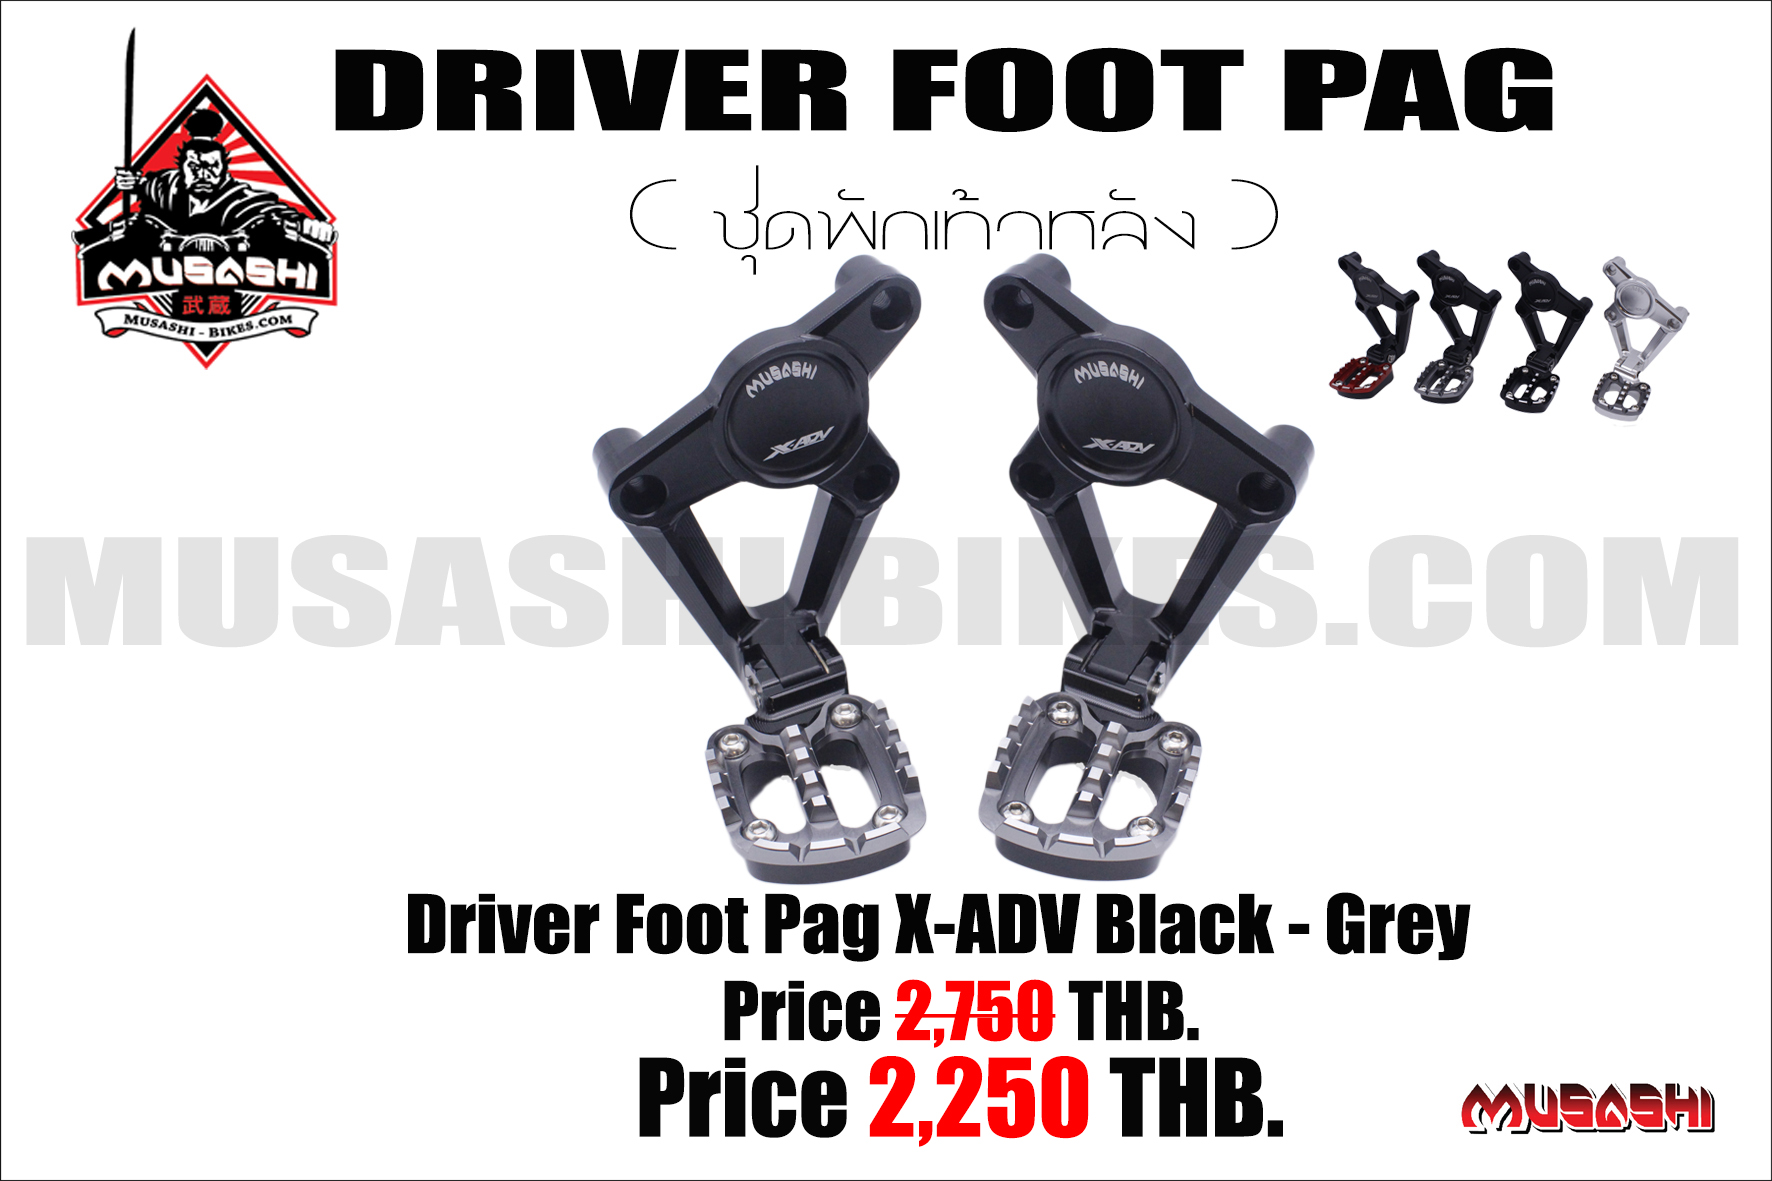 Driver Foot Pag For HONDA X-ADV 750cc